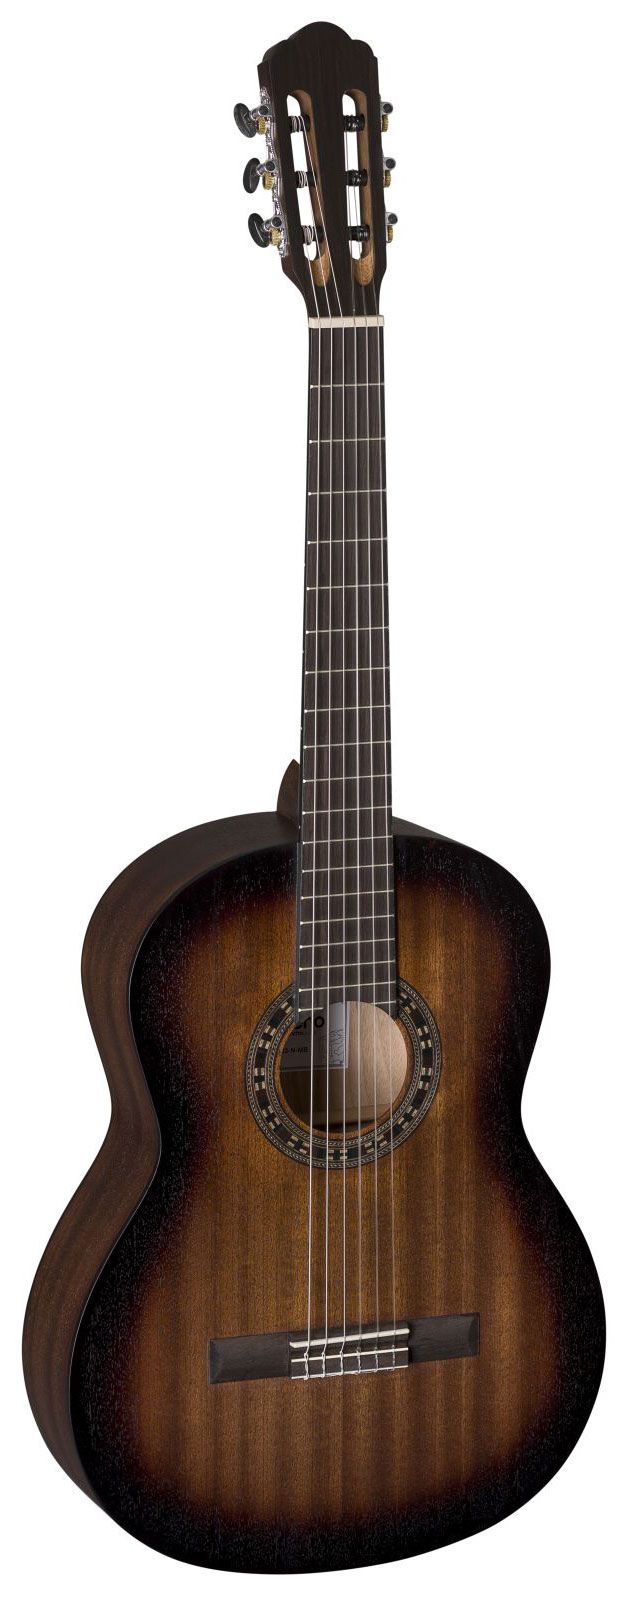 LA MANCHA / Германия LA MANCHA Granito 33-N-MB-3/4 - классическая гитара, верхняя дека: махагон, задняя дека и обечайка: махагон, гриф: махагон, накладка: овангкол, цвет: mahogany burst satin